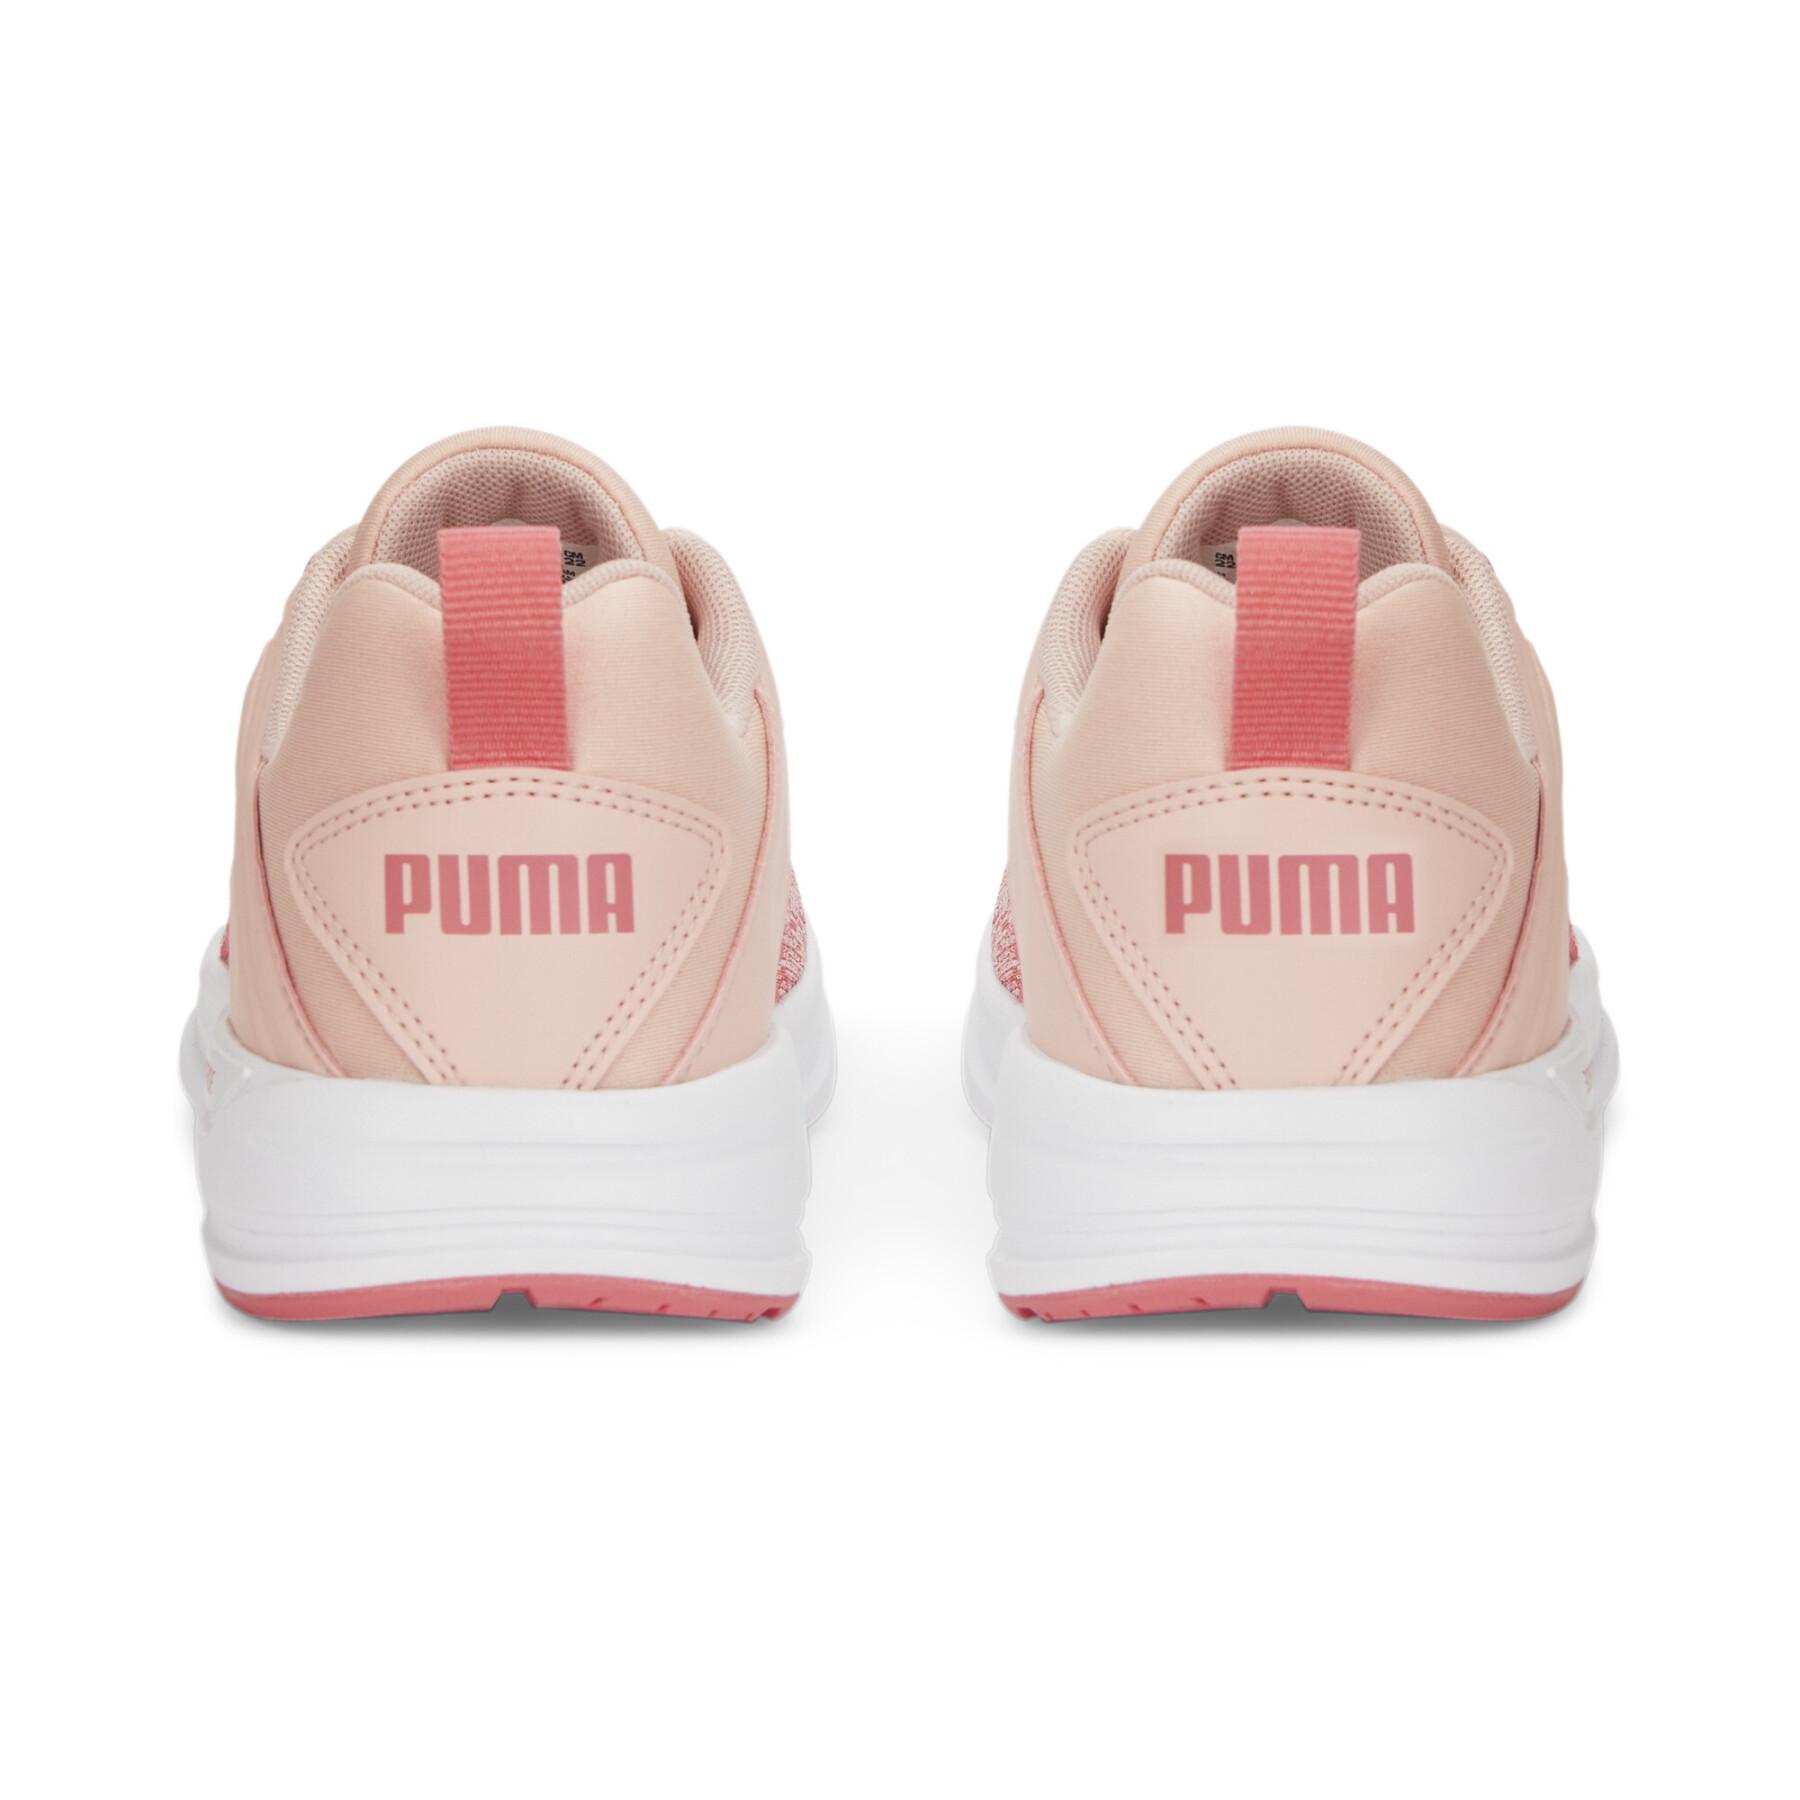  running calzado infantil Puma Comet 2 Alt